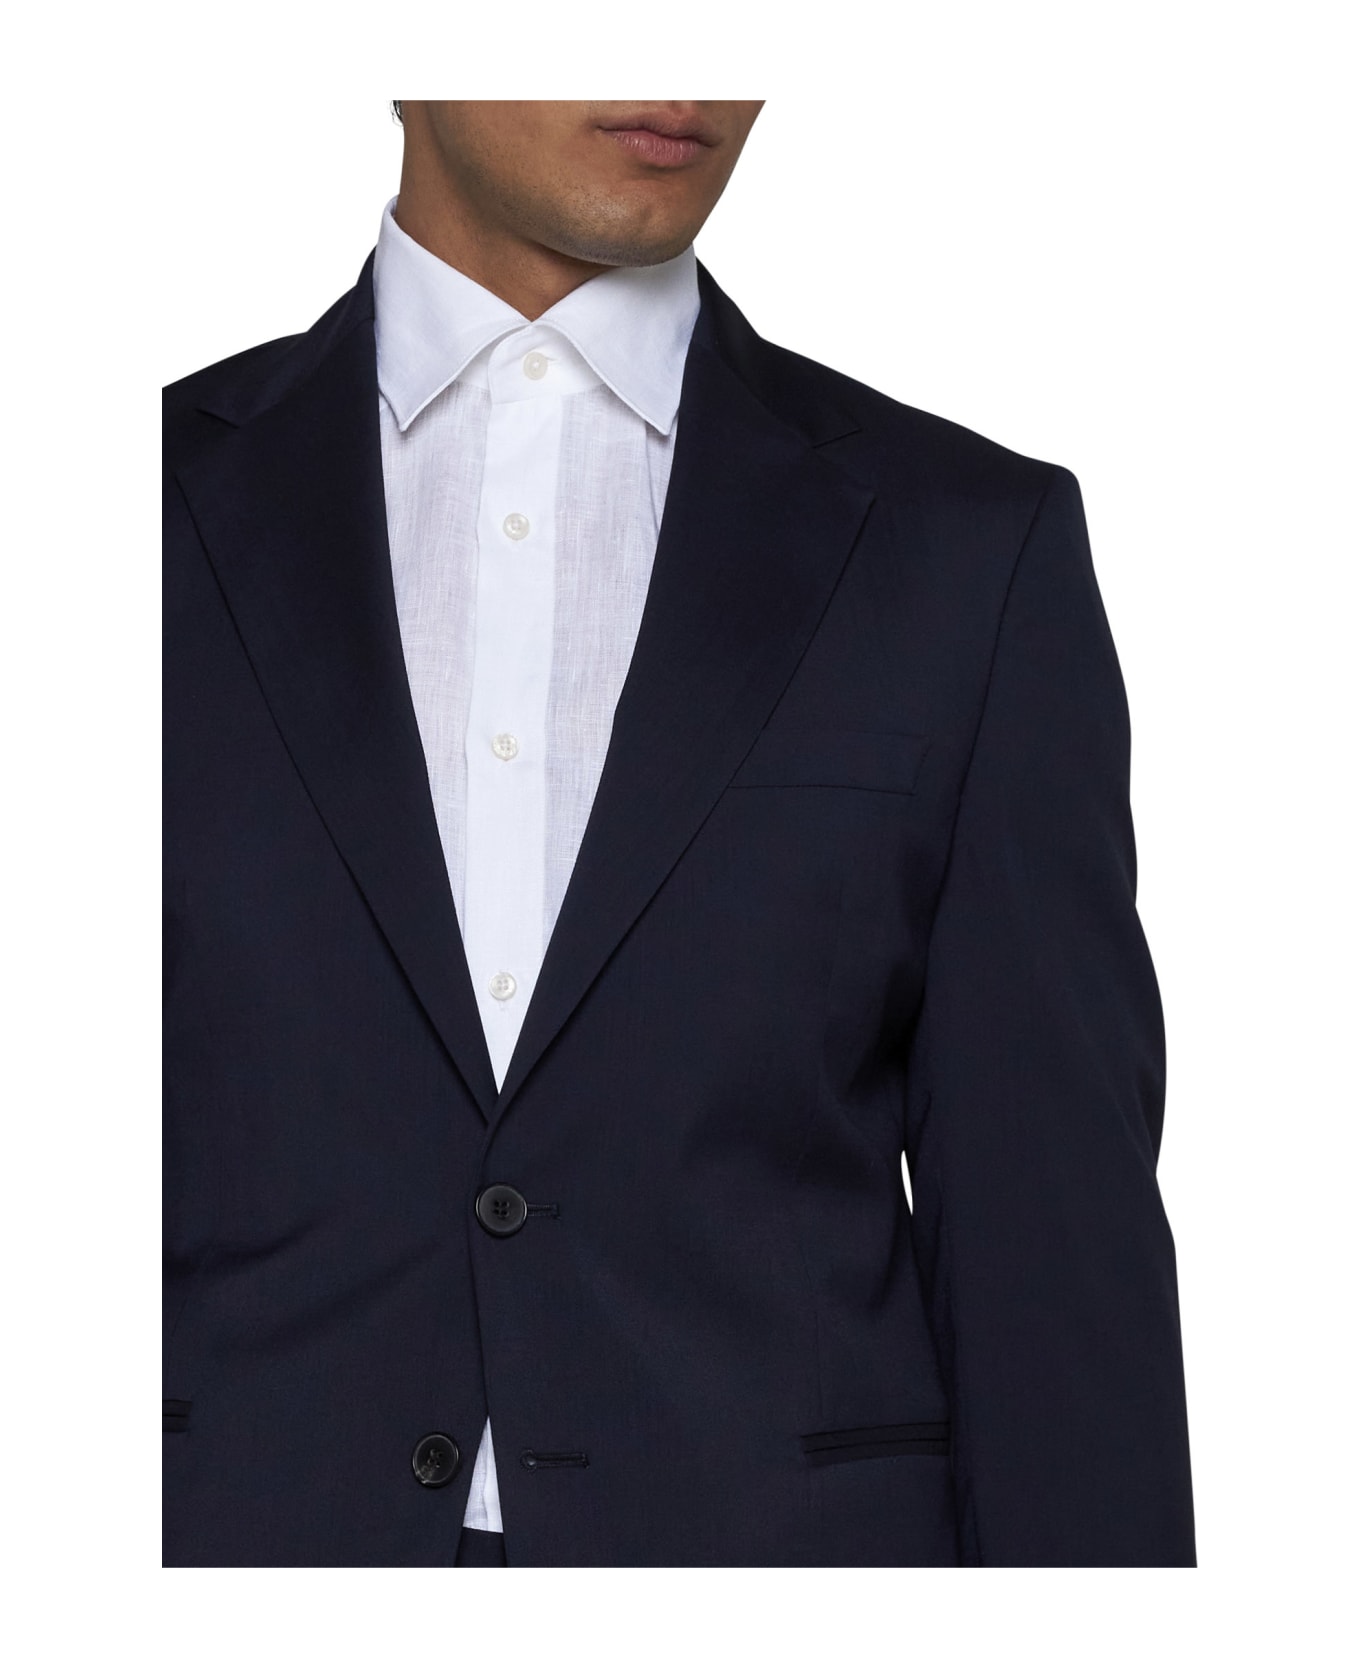 Low Brand Suit - Peacoat